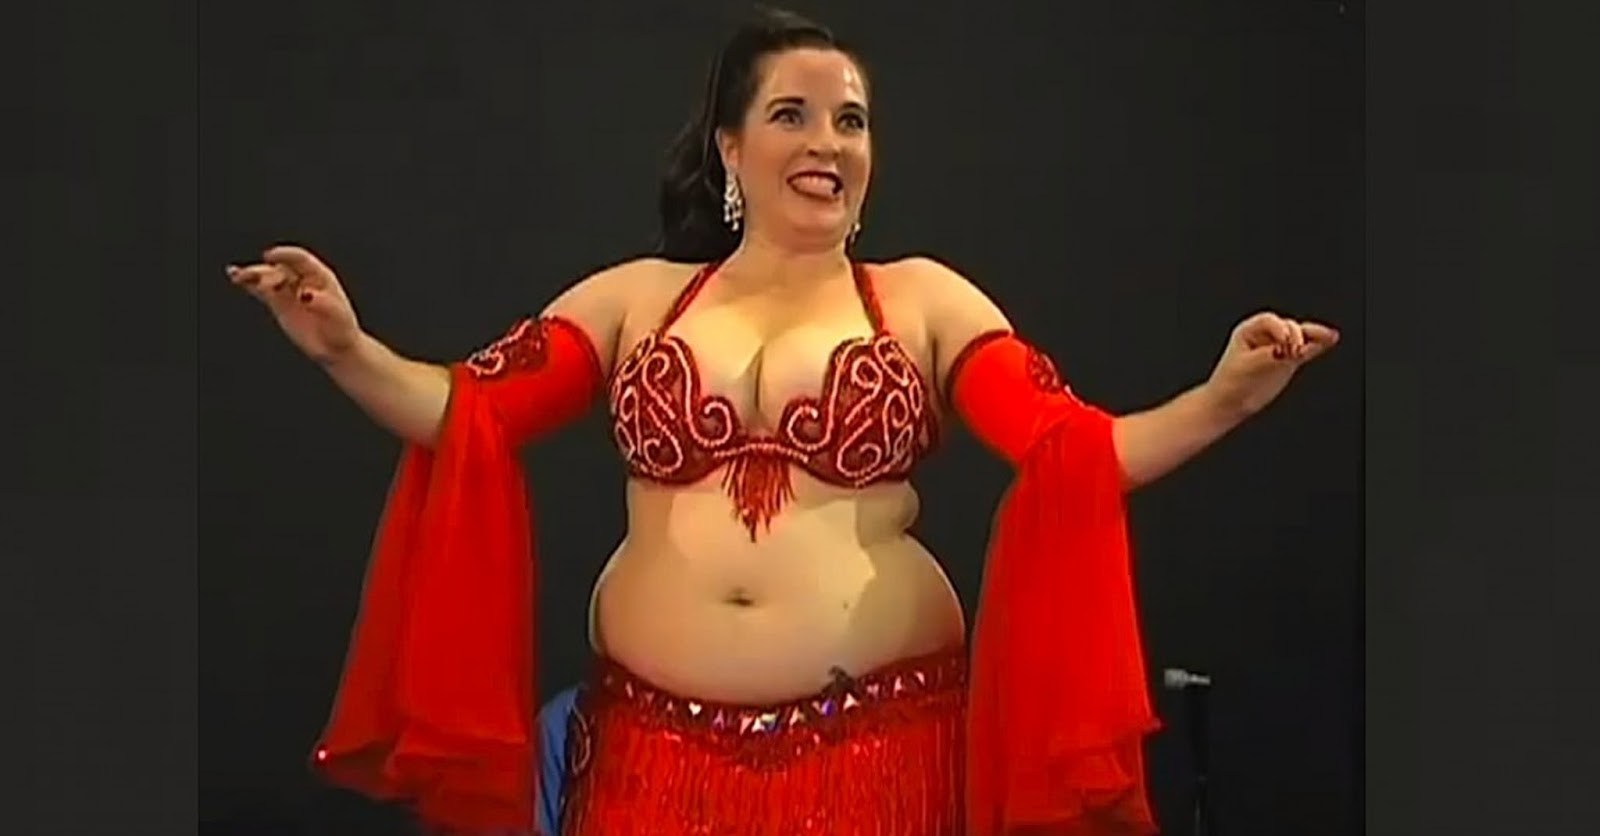 https://motherlesspics.com/uploads/posts/2023-03/1679229728_motherlesspics-com-p-porn-fat-woman-dancing-and-undressing-in-t-60.jpg